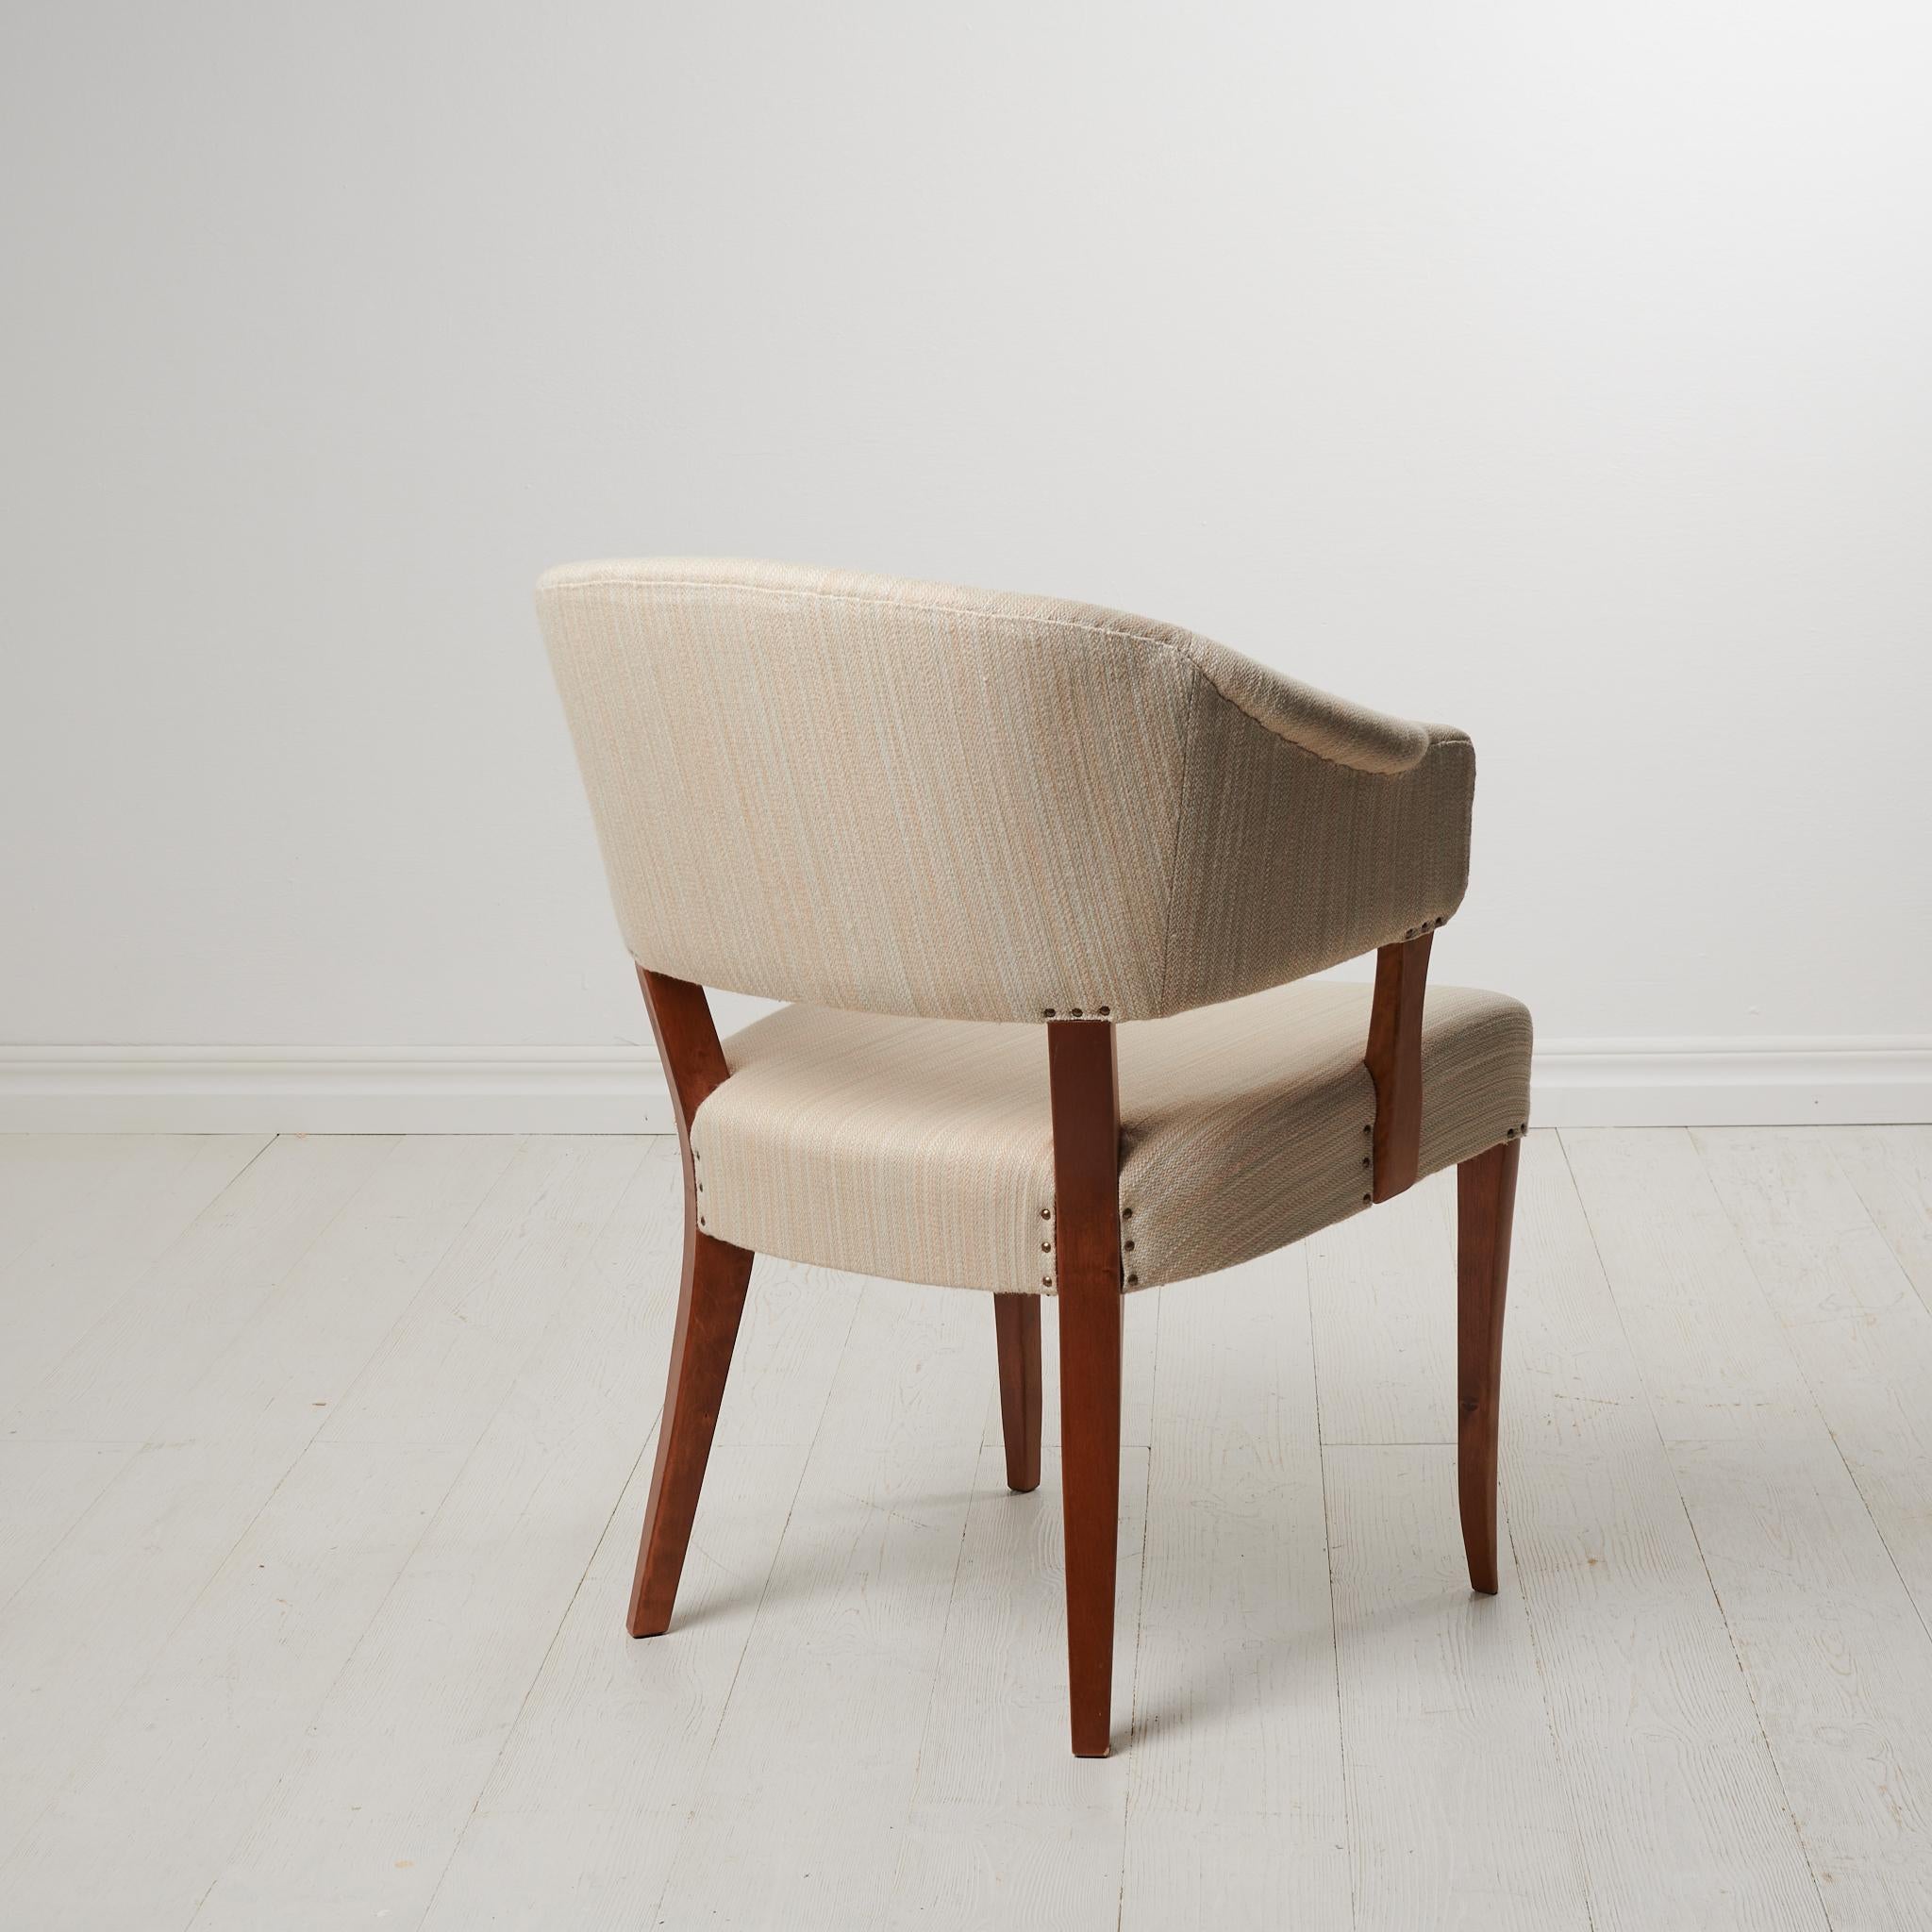 Swedish Scandinavian Modern Carl Malmsten ”Lata Greven” Chair